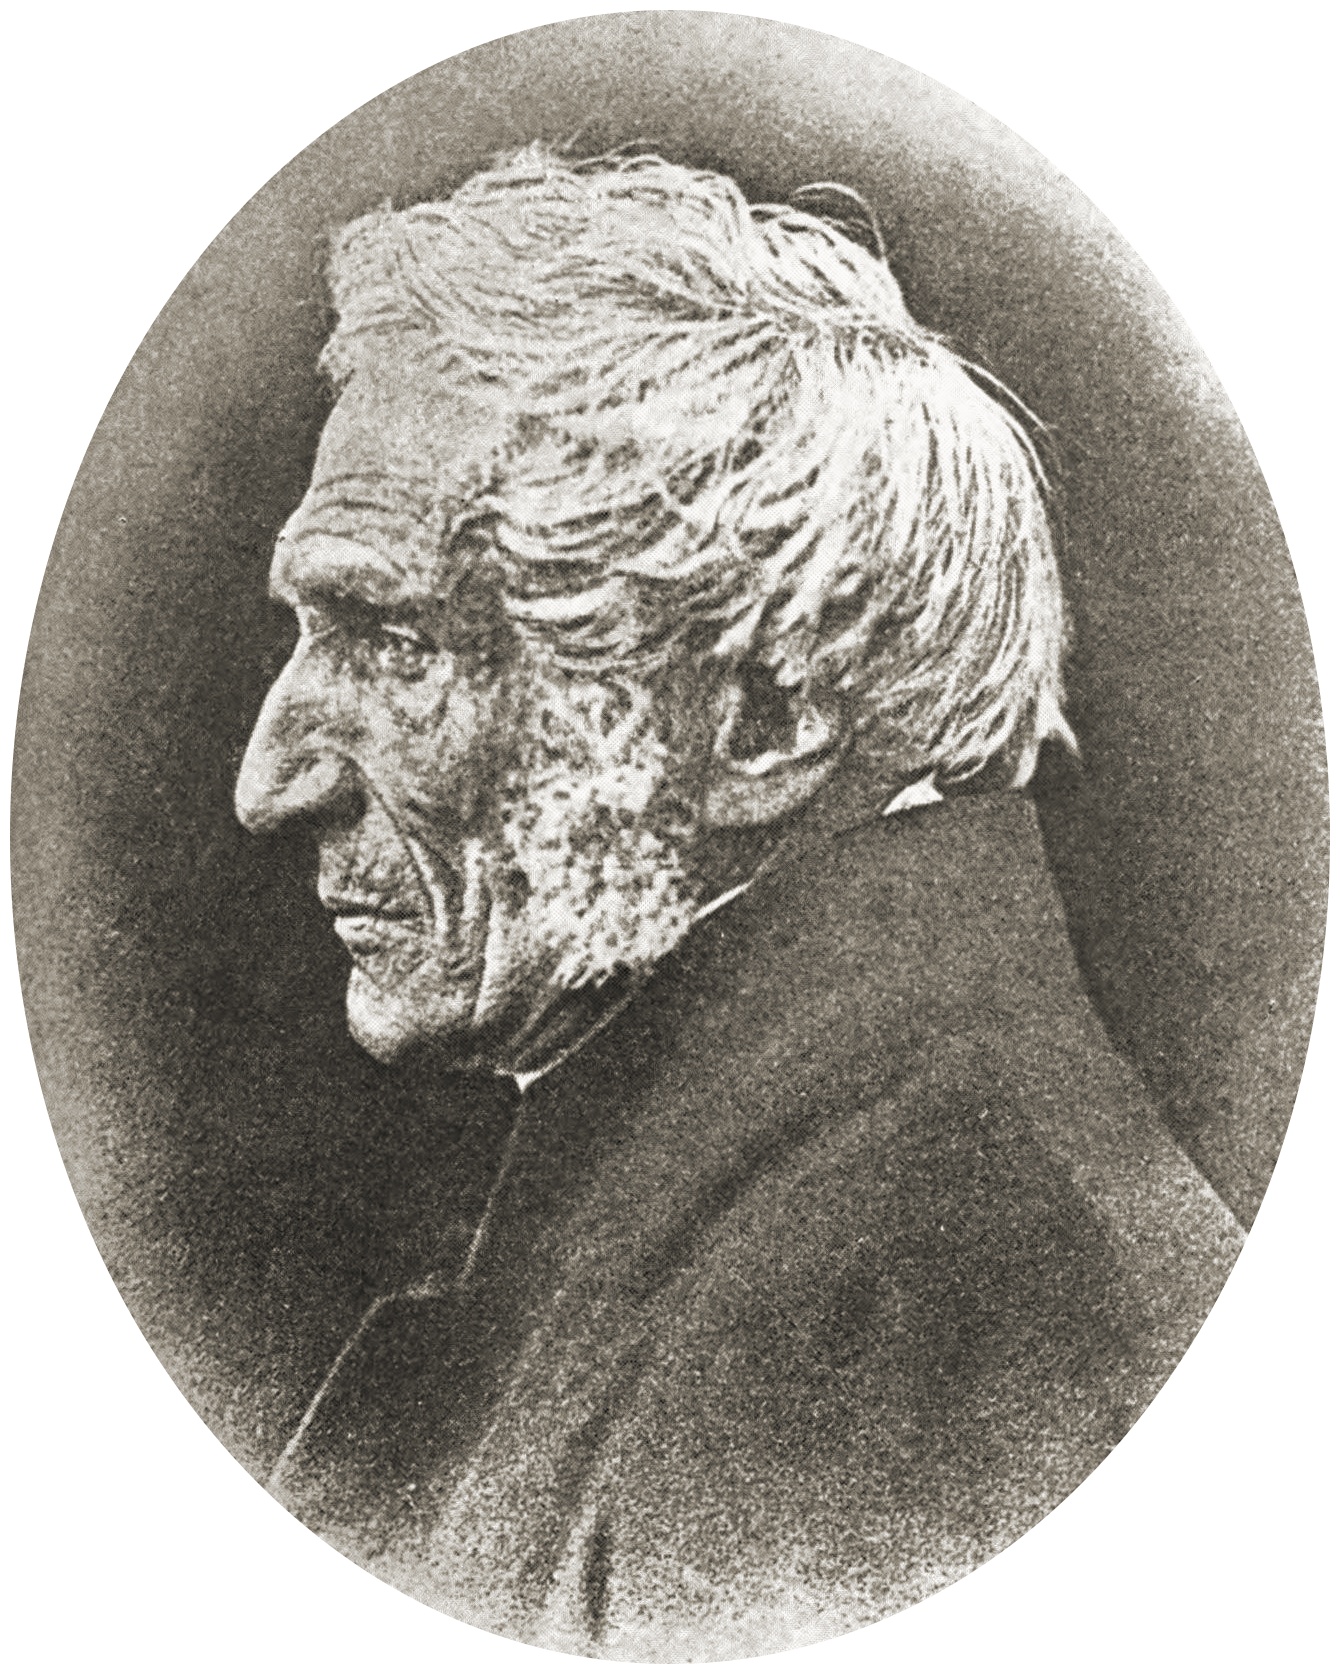 Headshot of George J. Mountain